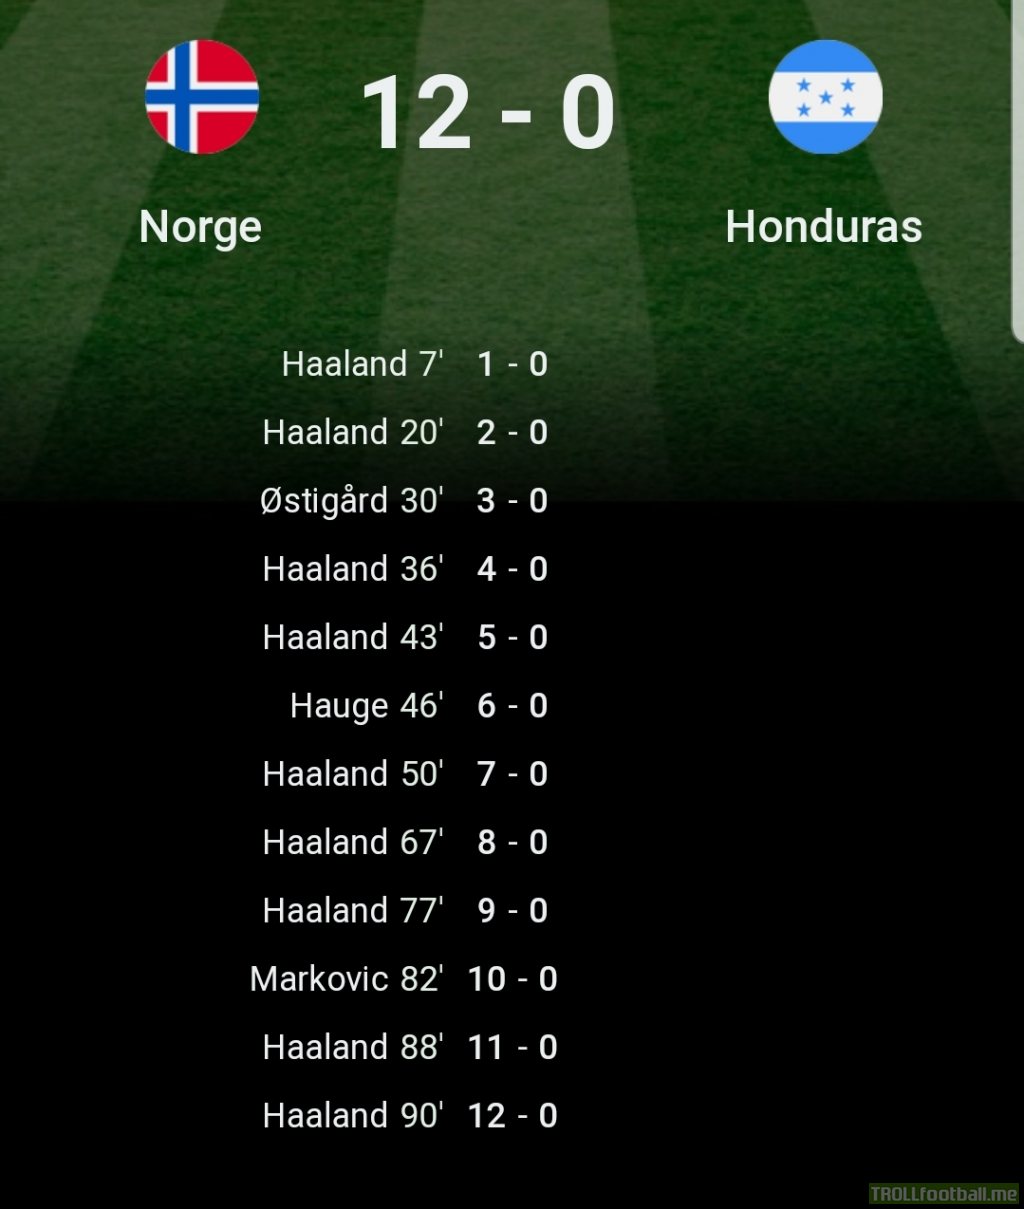 Erling Haaland in his match vs Honduras in the Under20sWC scored NINE